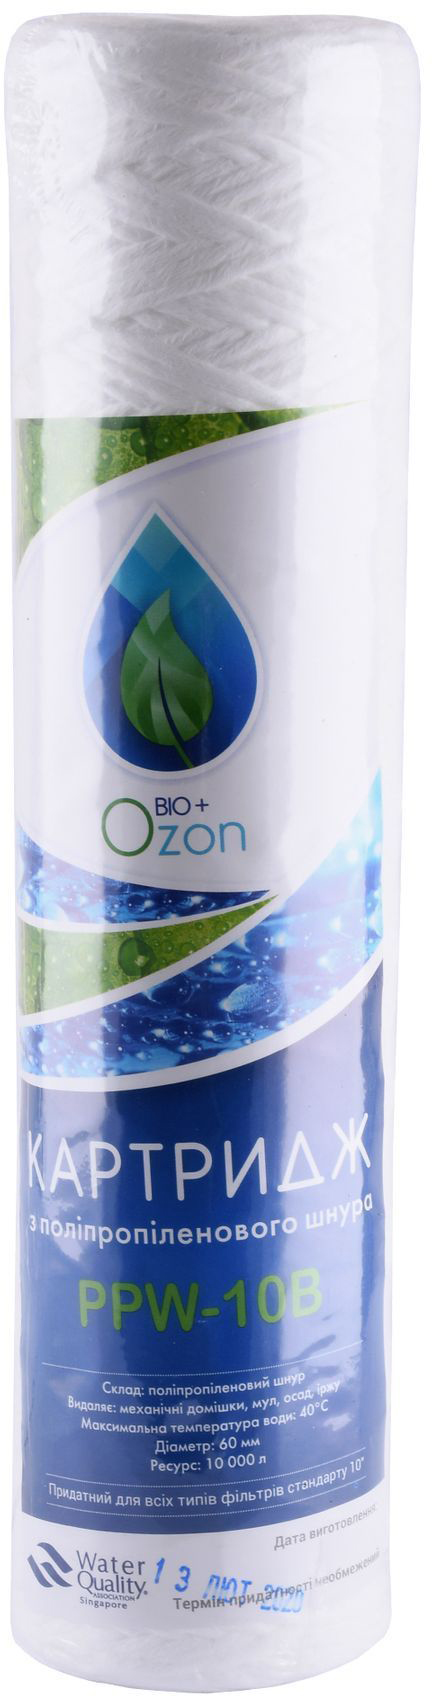 Ozon Bio+ PPW-10B NEW (10 мкм)